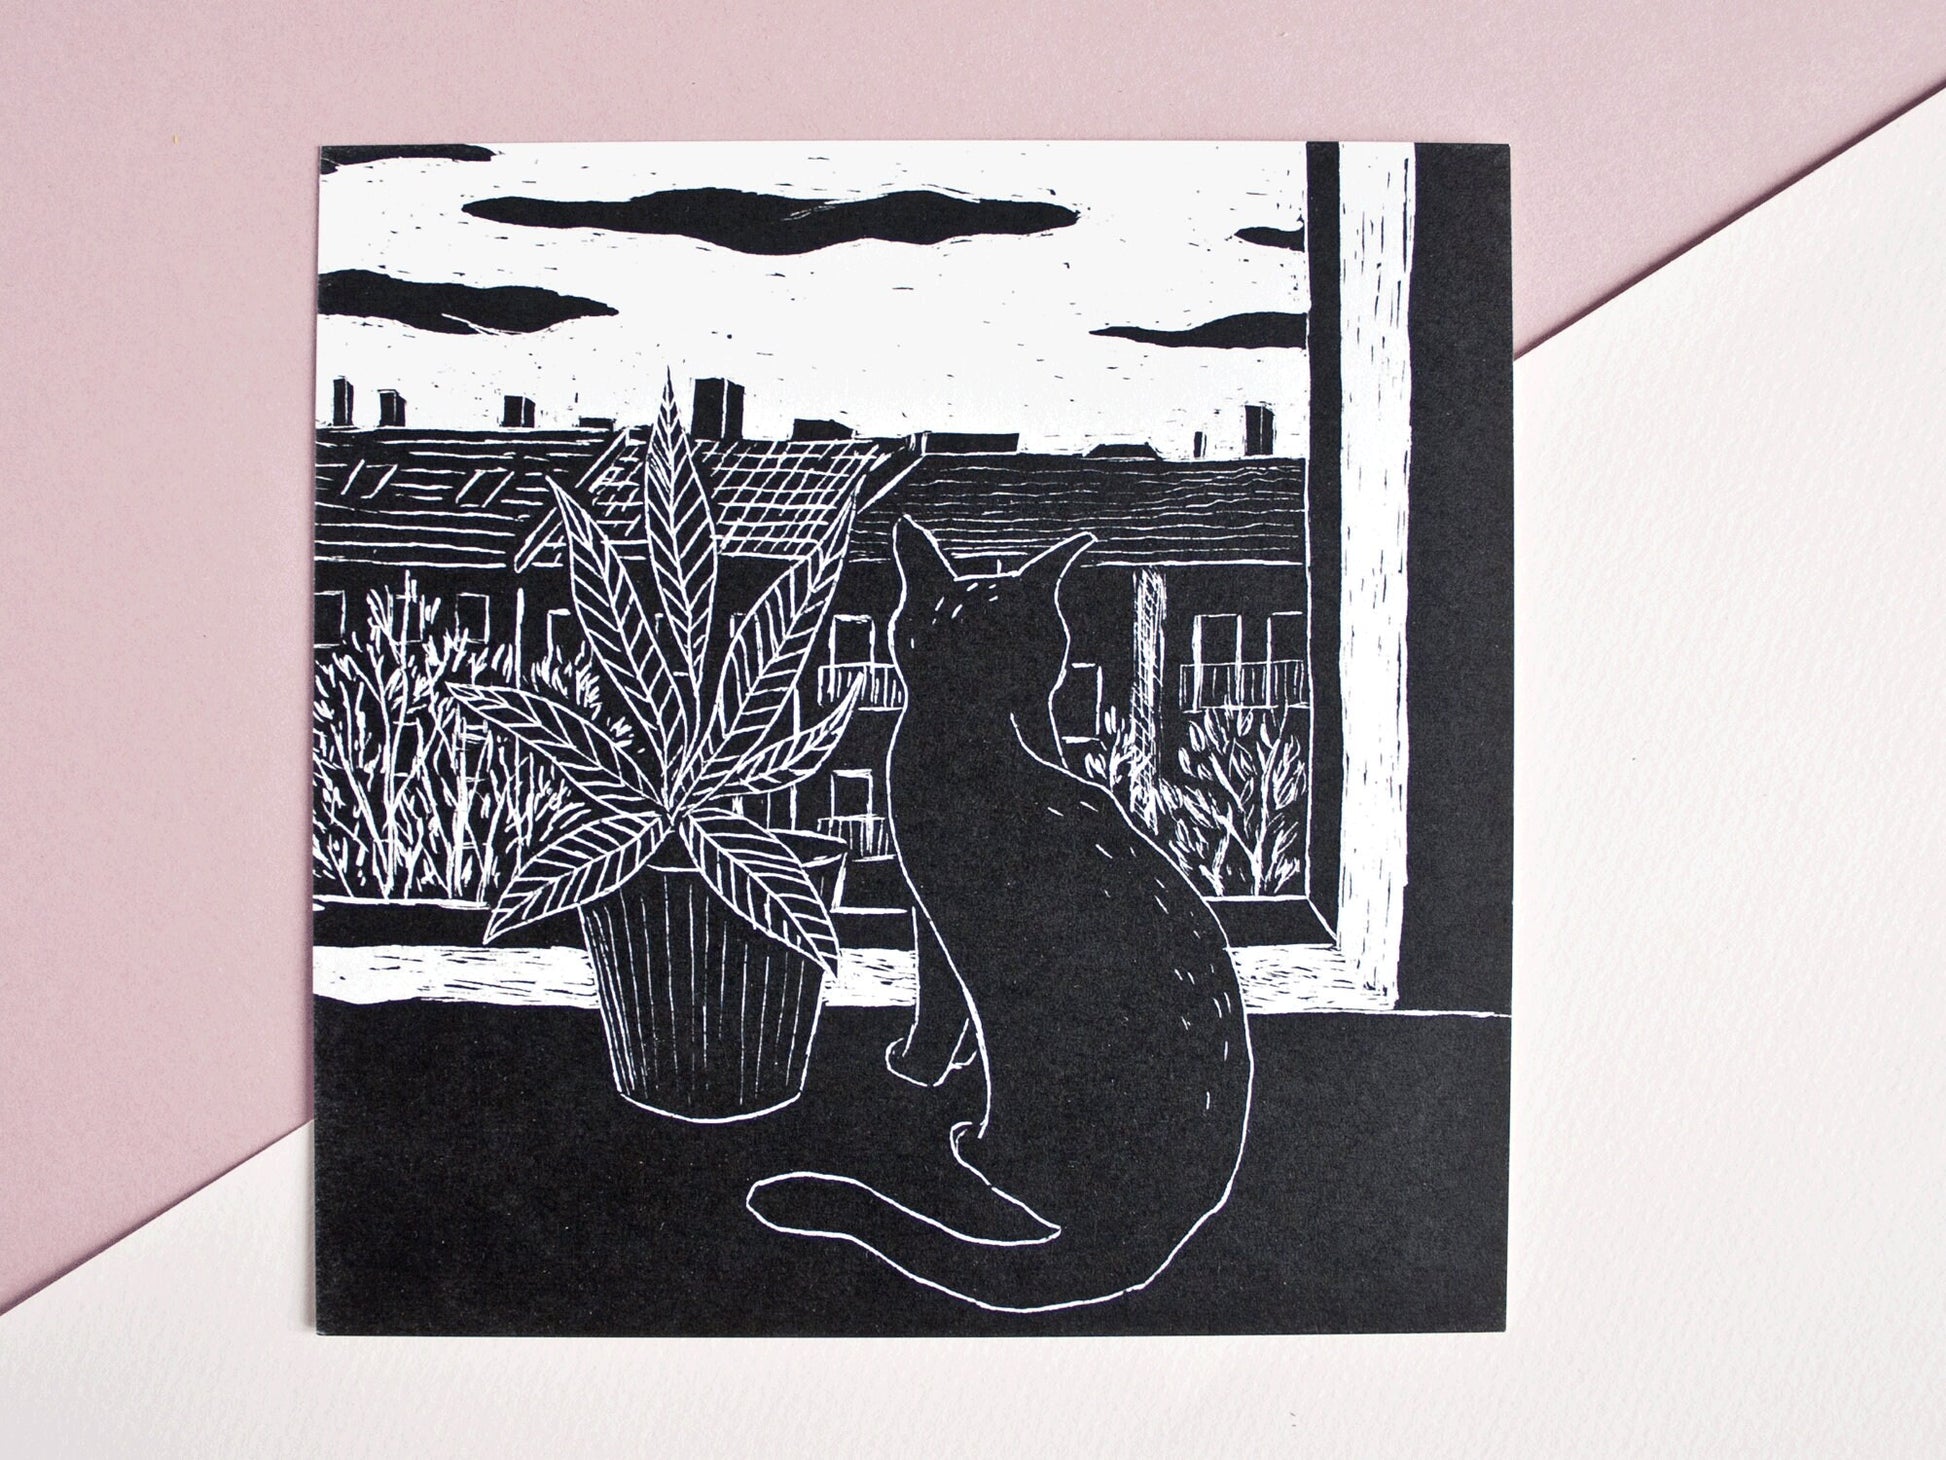 Quadratische Postkarte Katze am Fenster